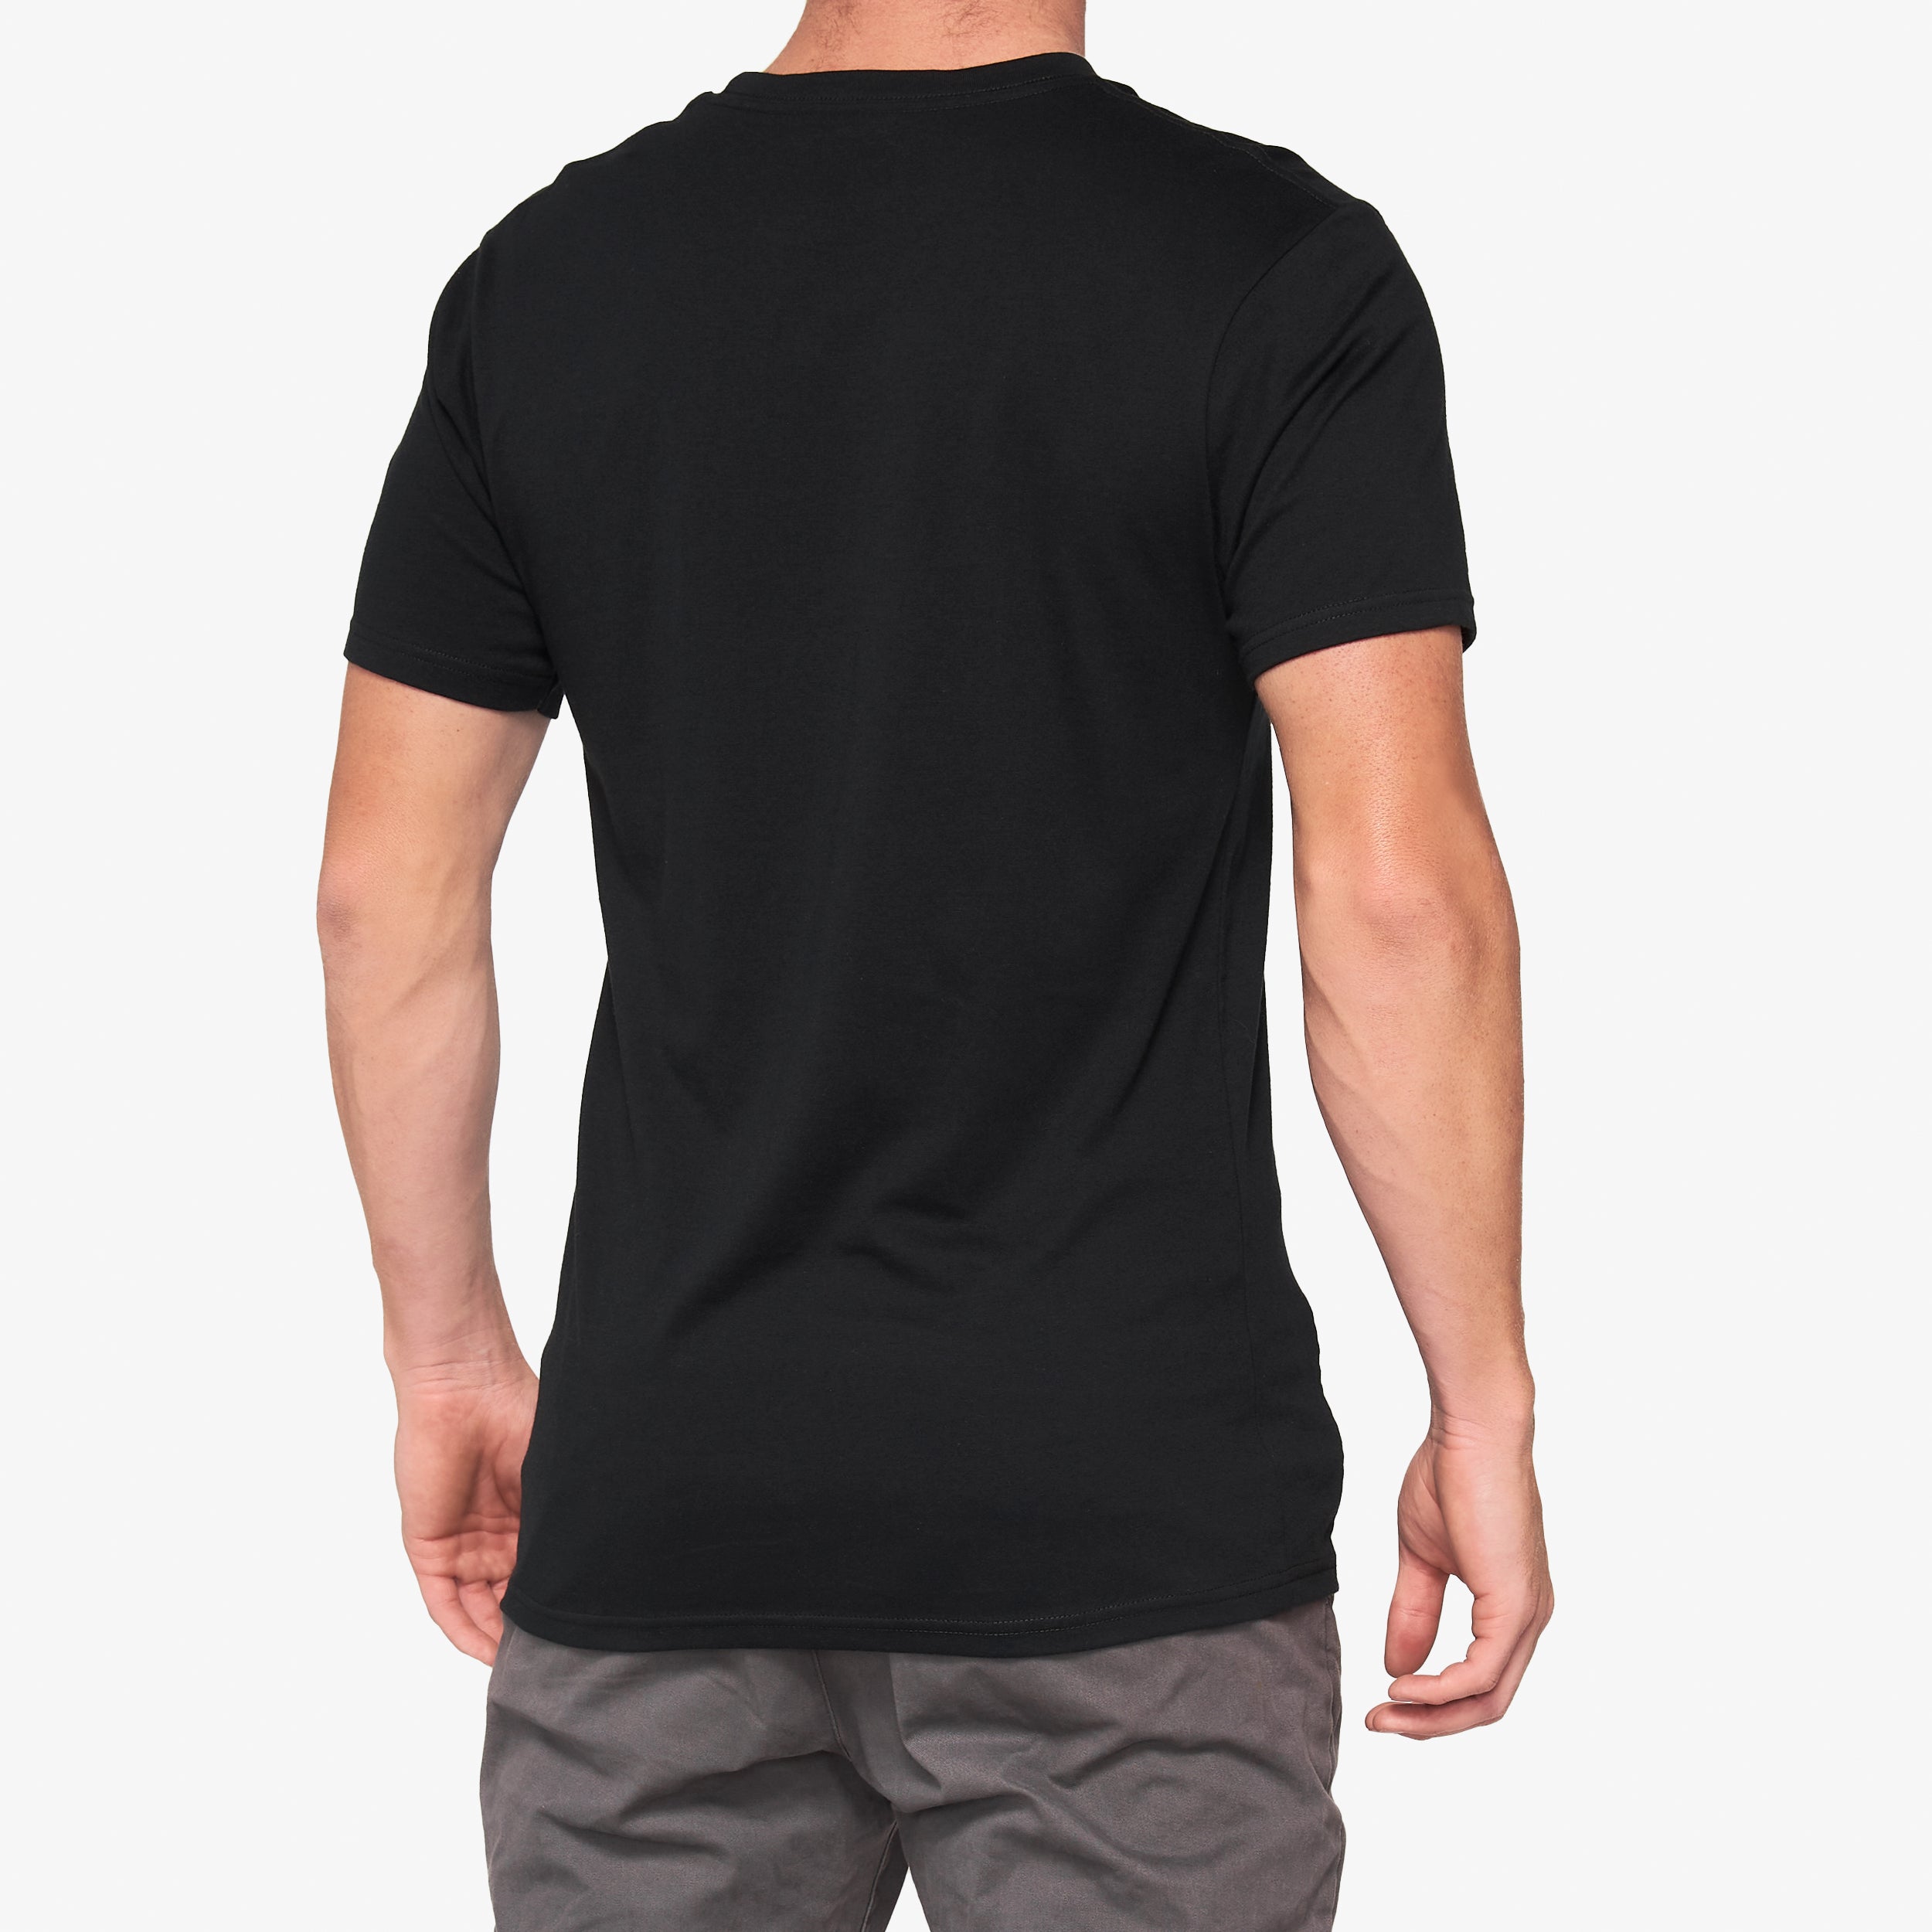 ESSENTIAL T-Shirt Black/Snake - Secondary